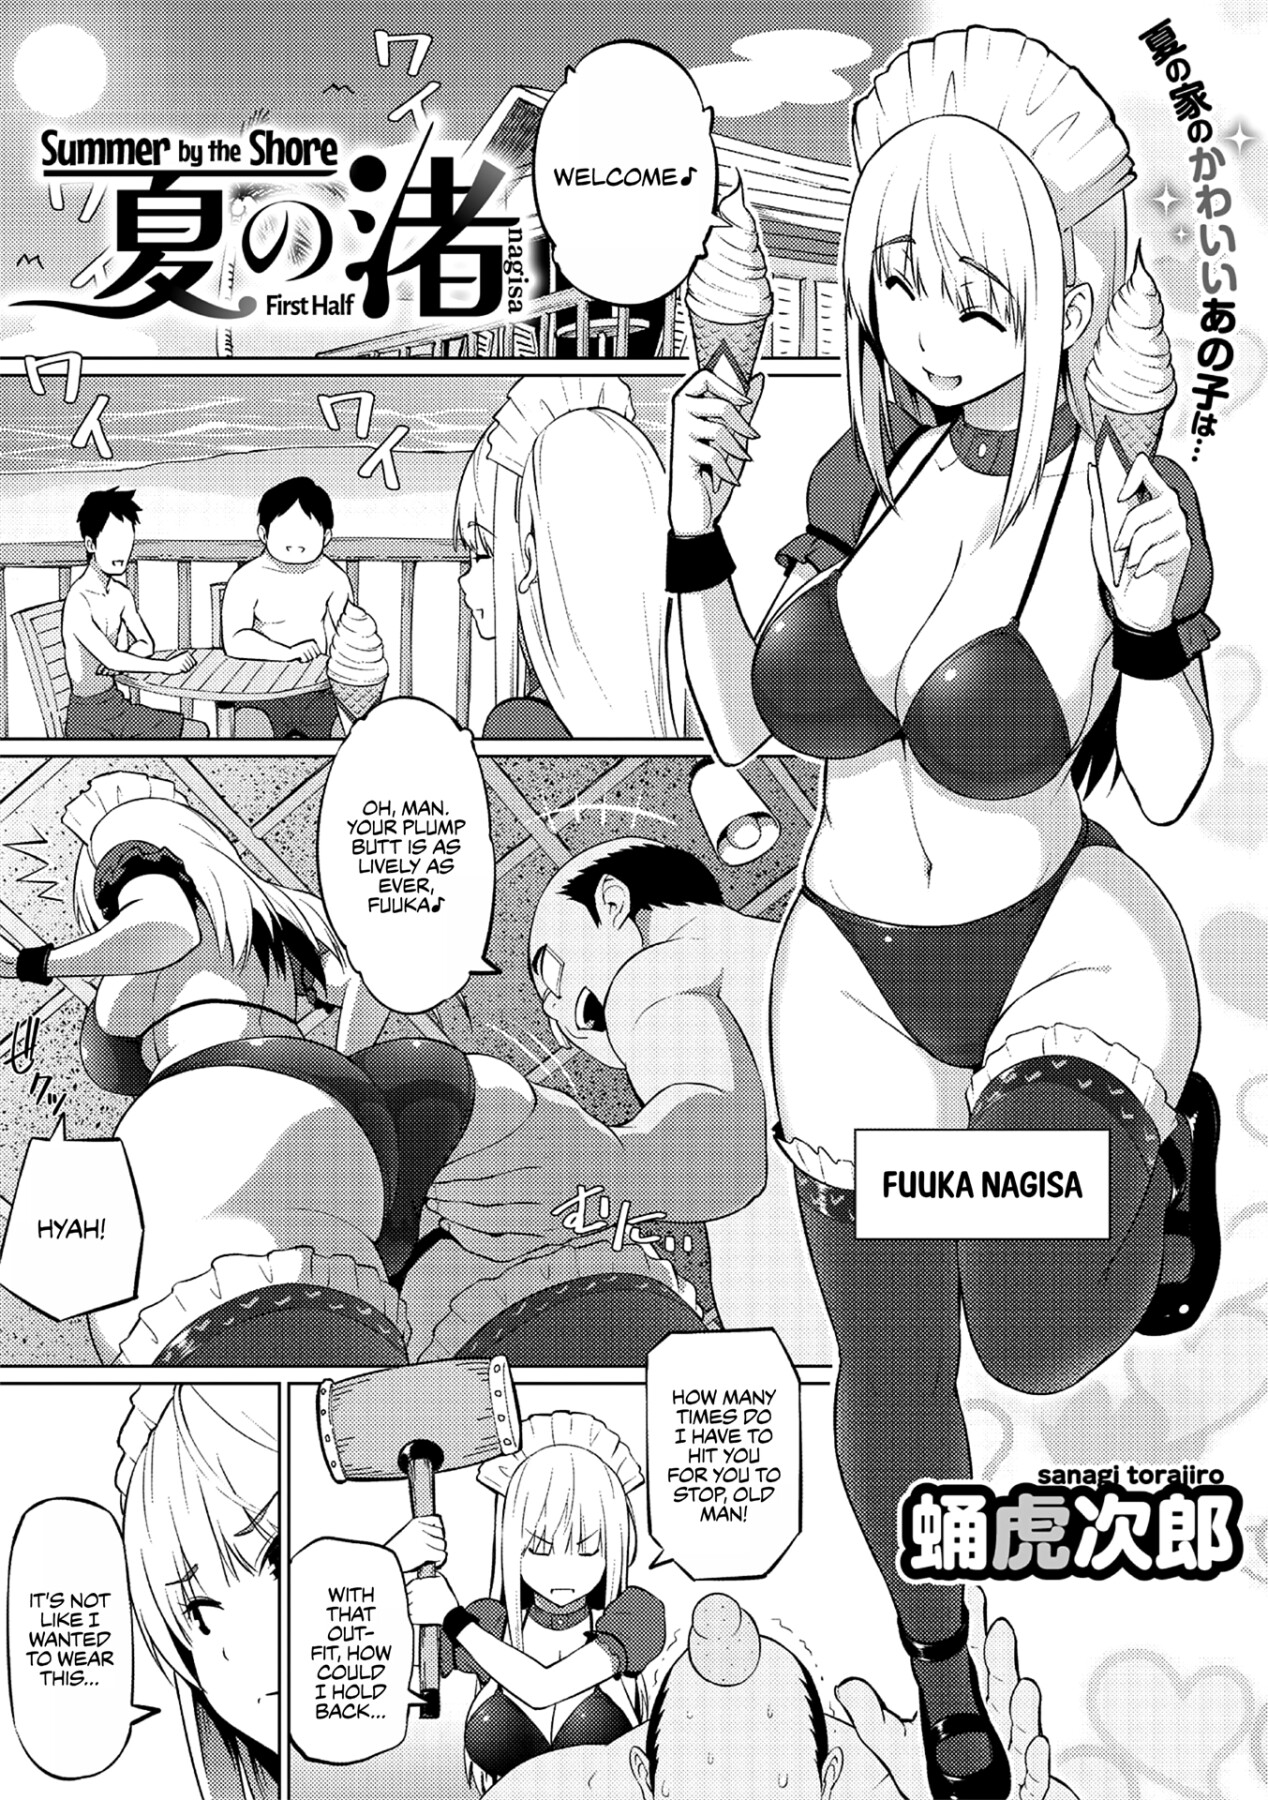 Hentai Manga Comic-Summer by the Shore - First Half-Read-1